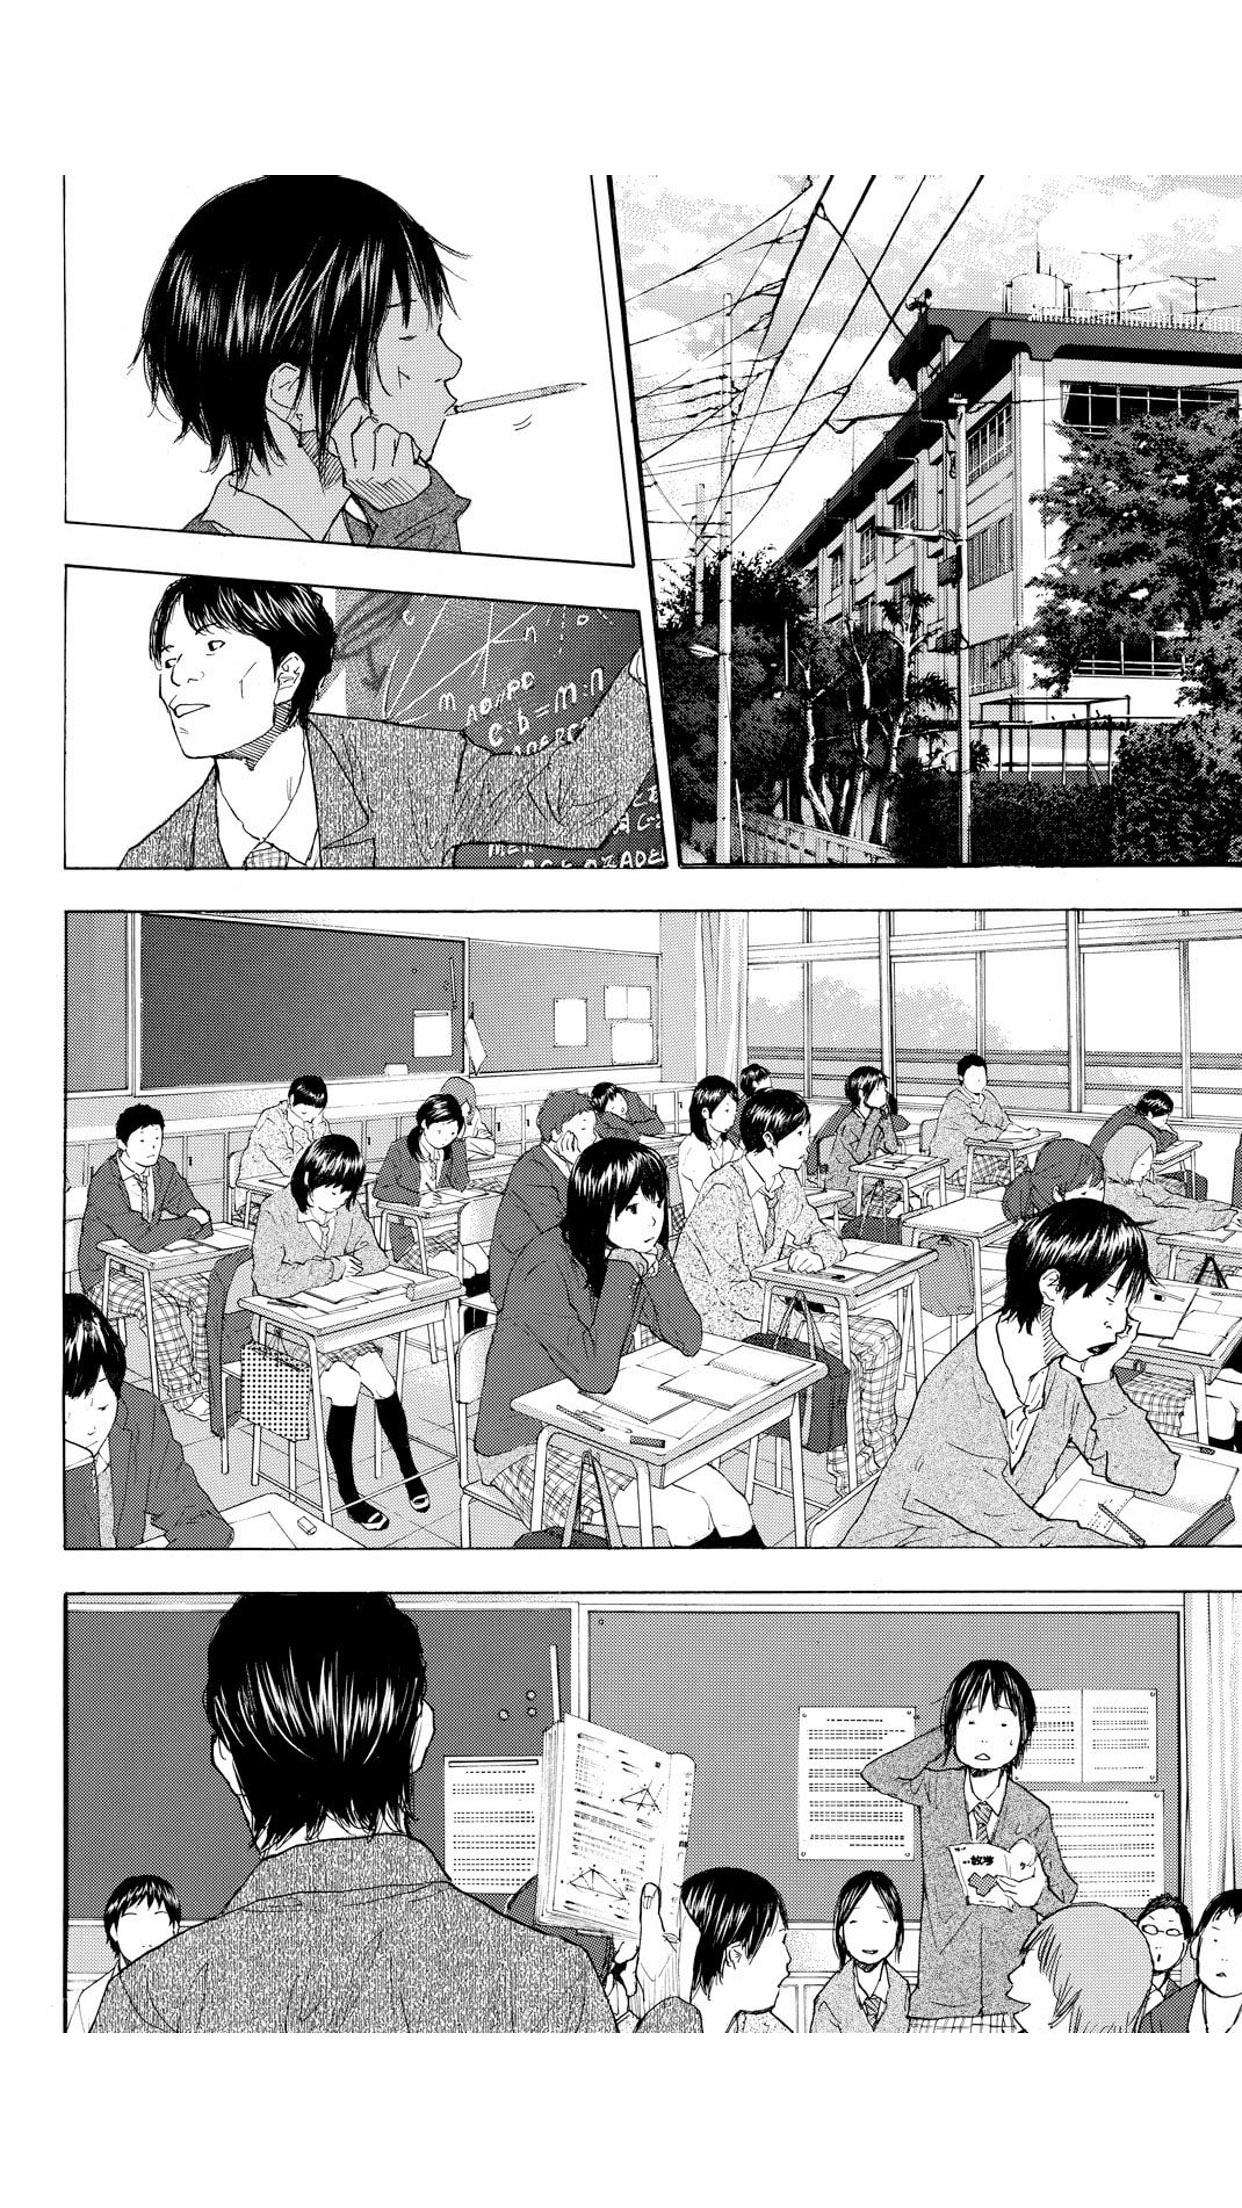 Domestic Na Kanojo Manga - Chapter 144 - Manga Rock Team - Read